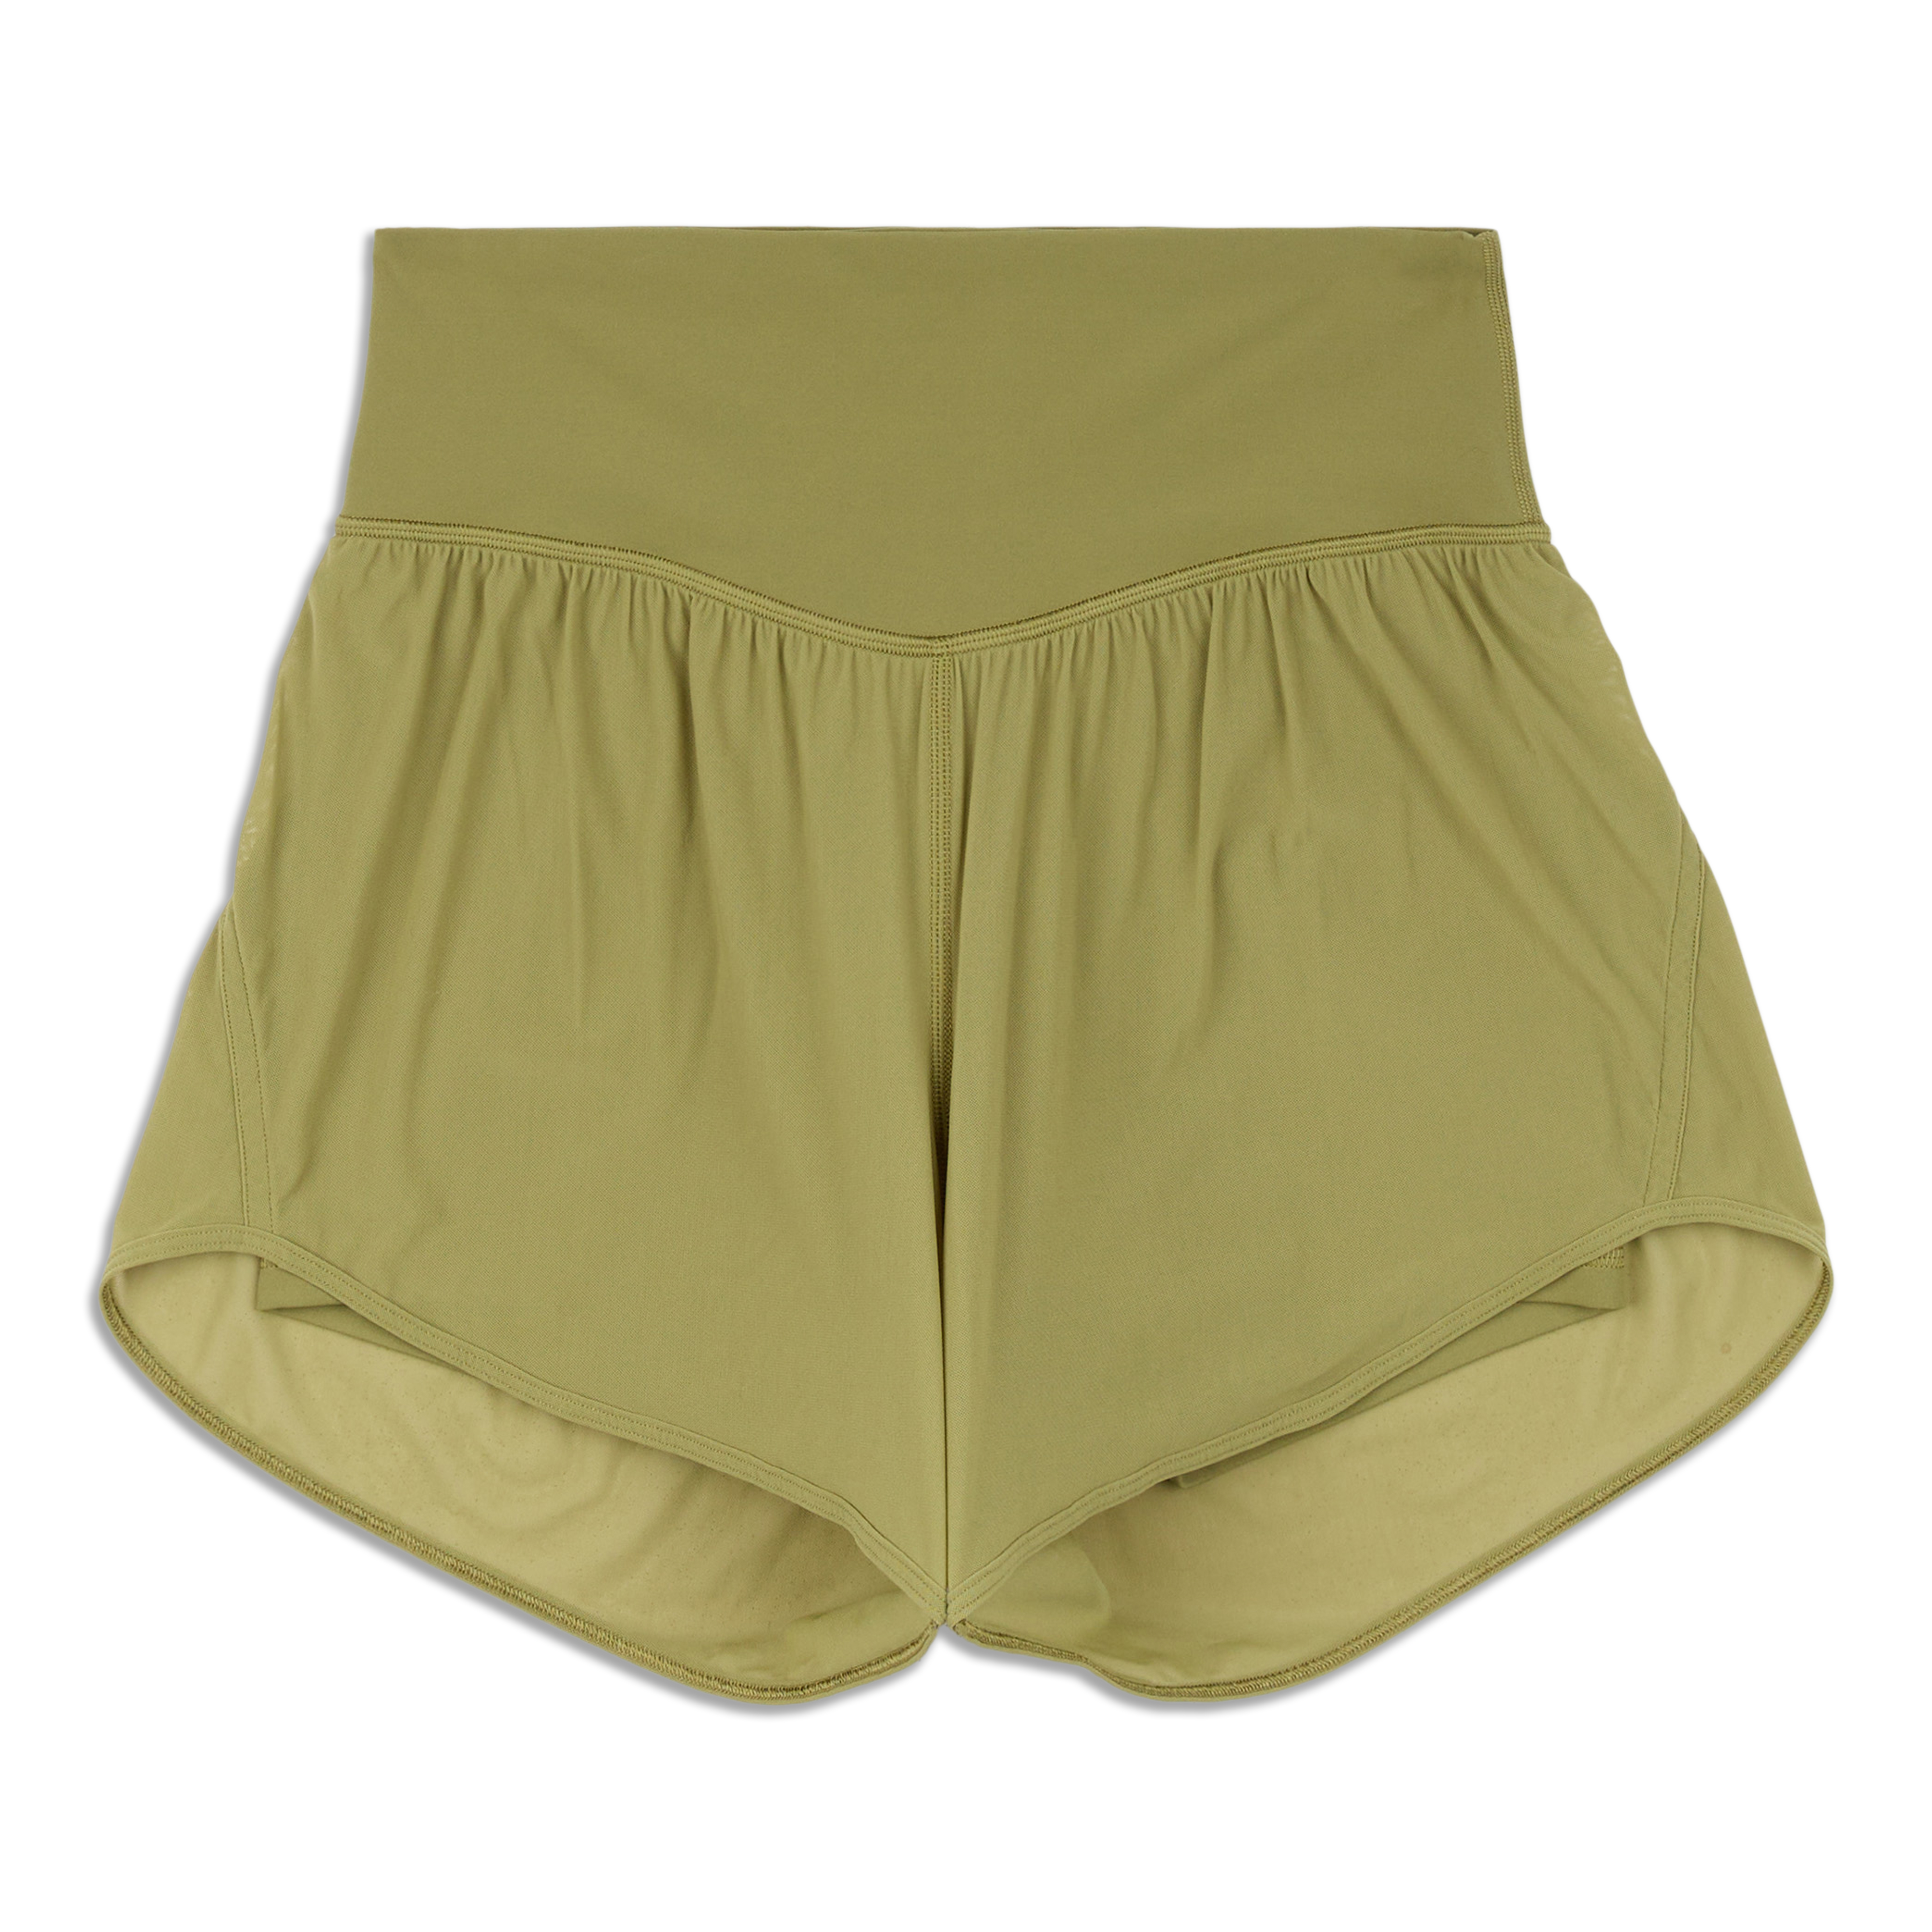 Lululemon nulu and mesh HR shorts - Athletic apparel